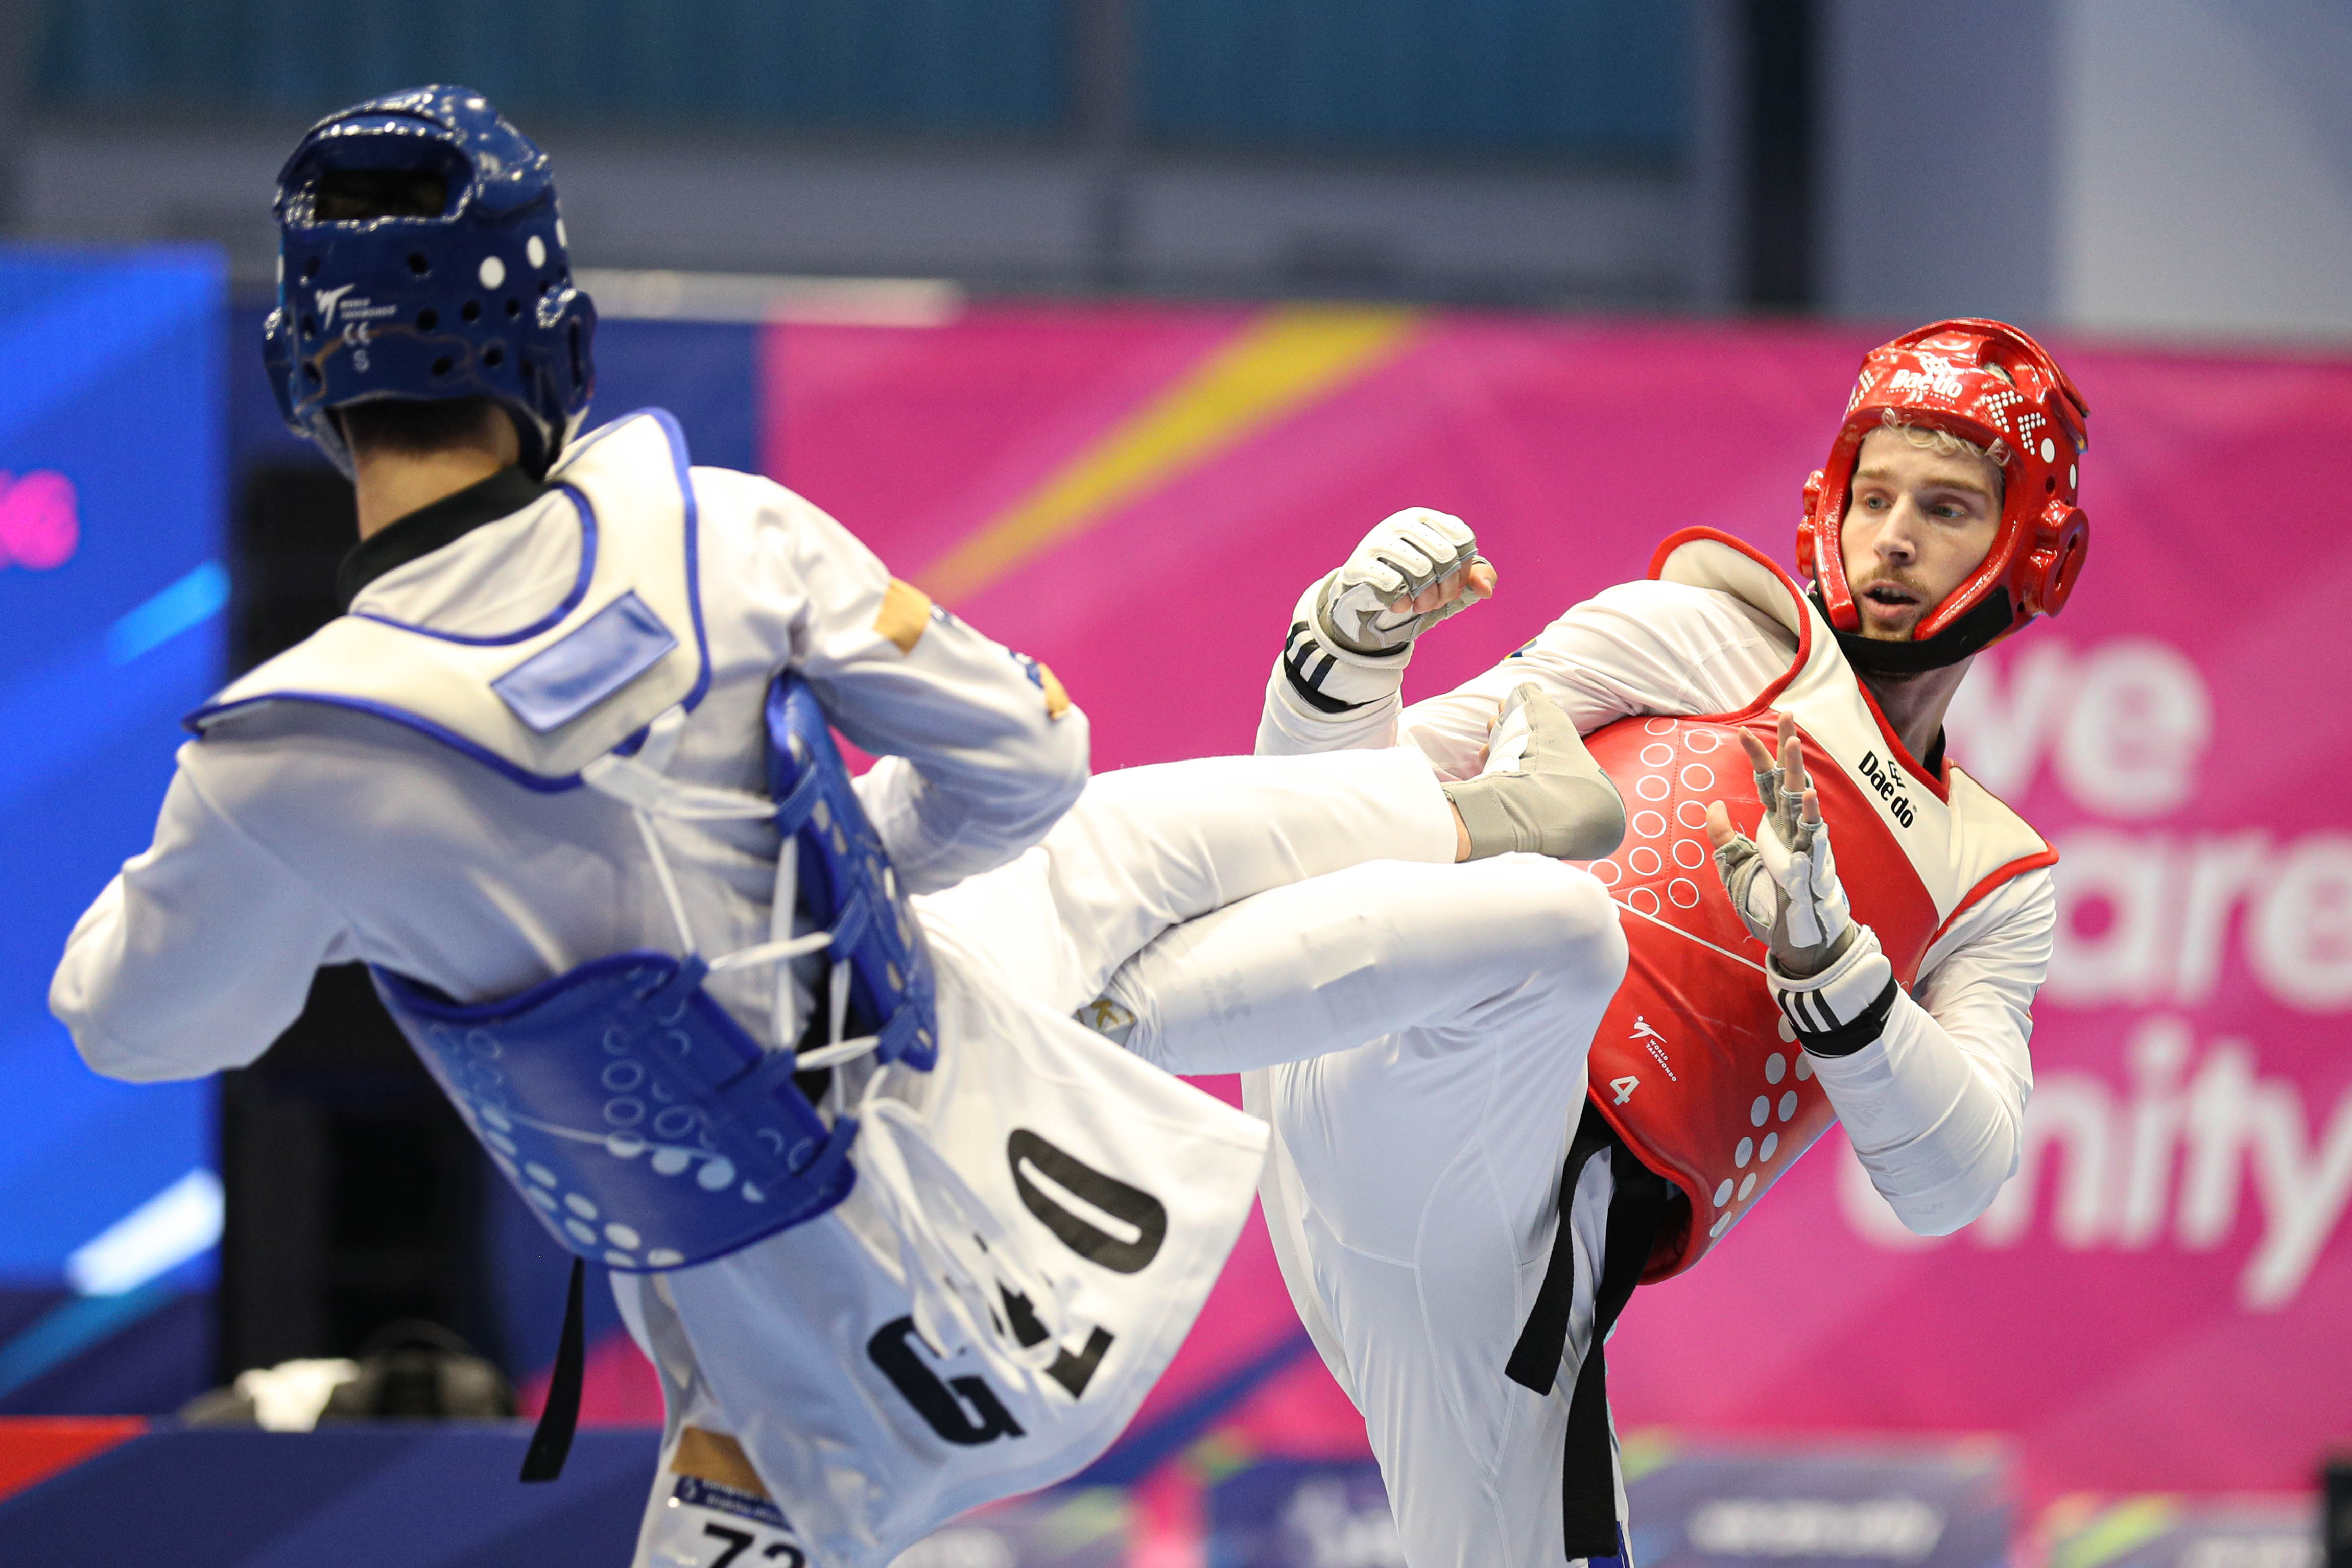 Extraordinary stories at taekwondo tournament during European Games